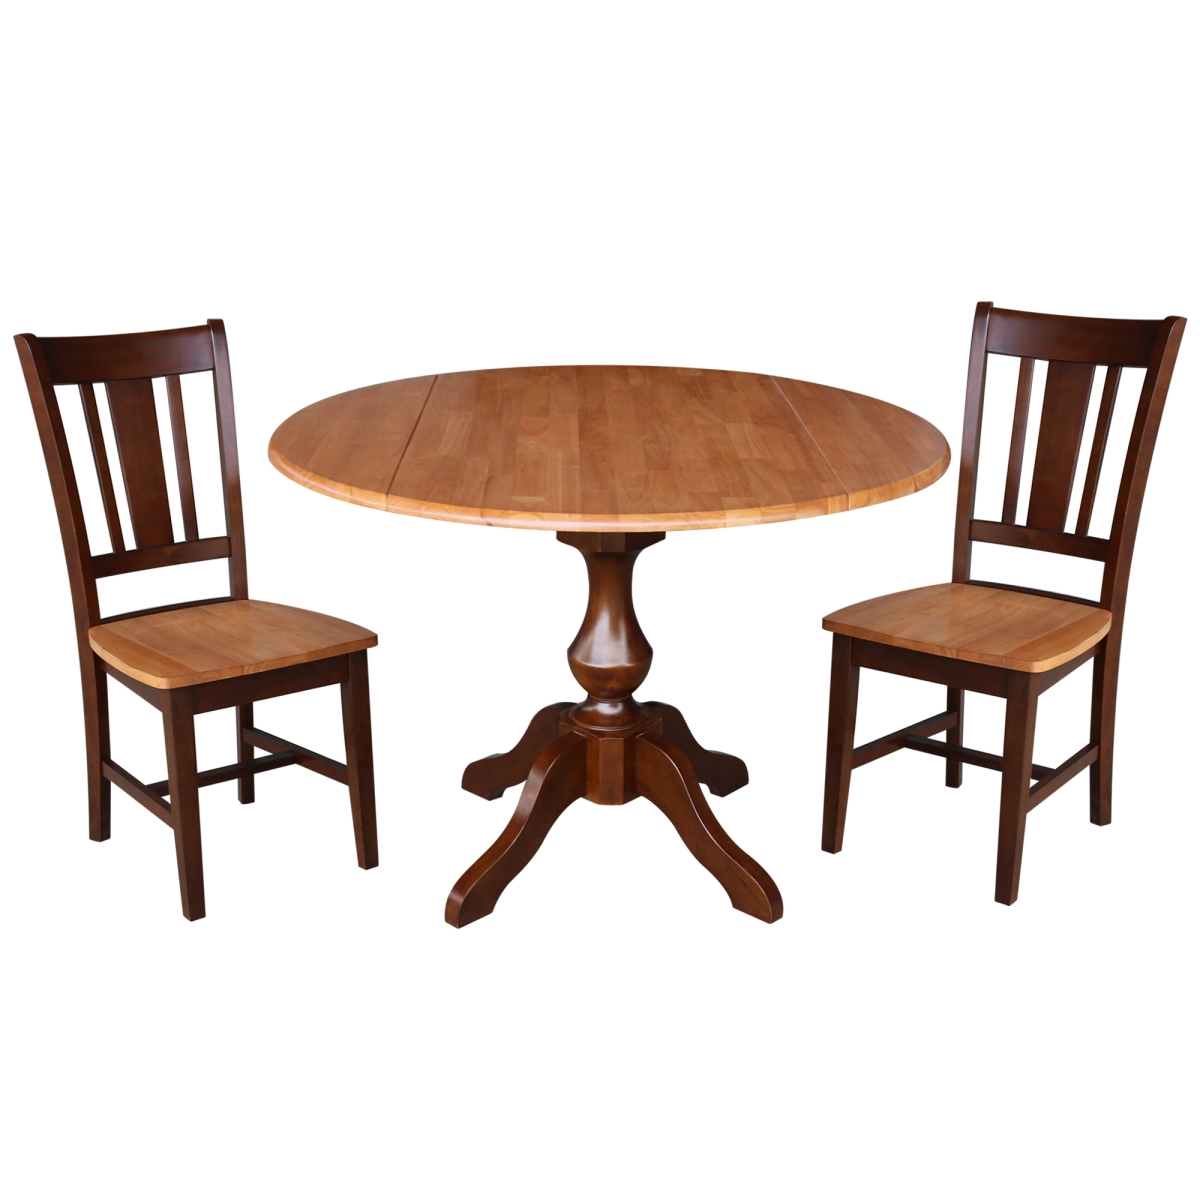 K58-42dpt-11b-c10-2 42 In. Round Top Pedestal Table With 2 Chairs - Cinnemon & Espresso